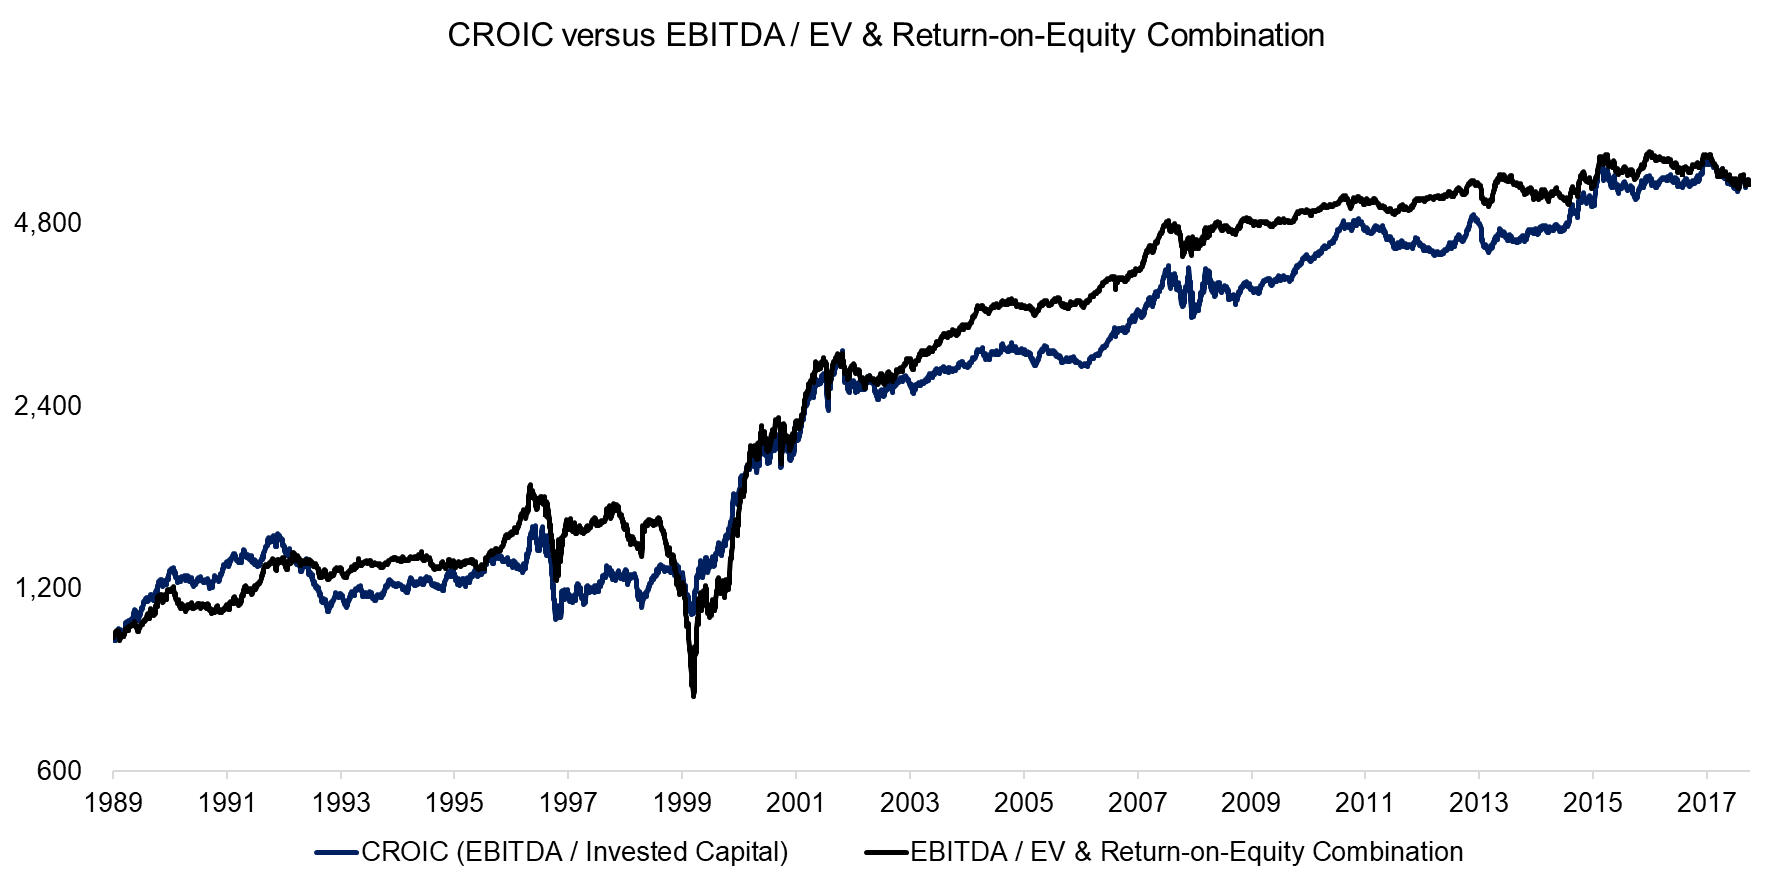 CROIC versus EBITDA EV & Return-on-Equity Combination